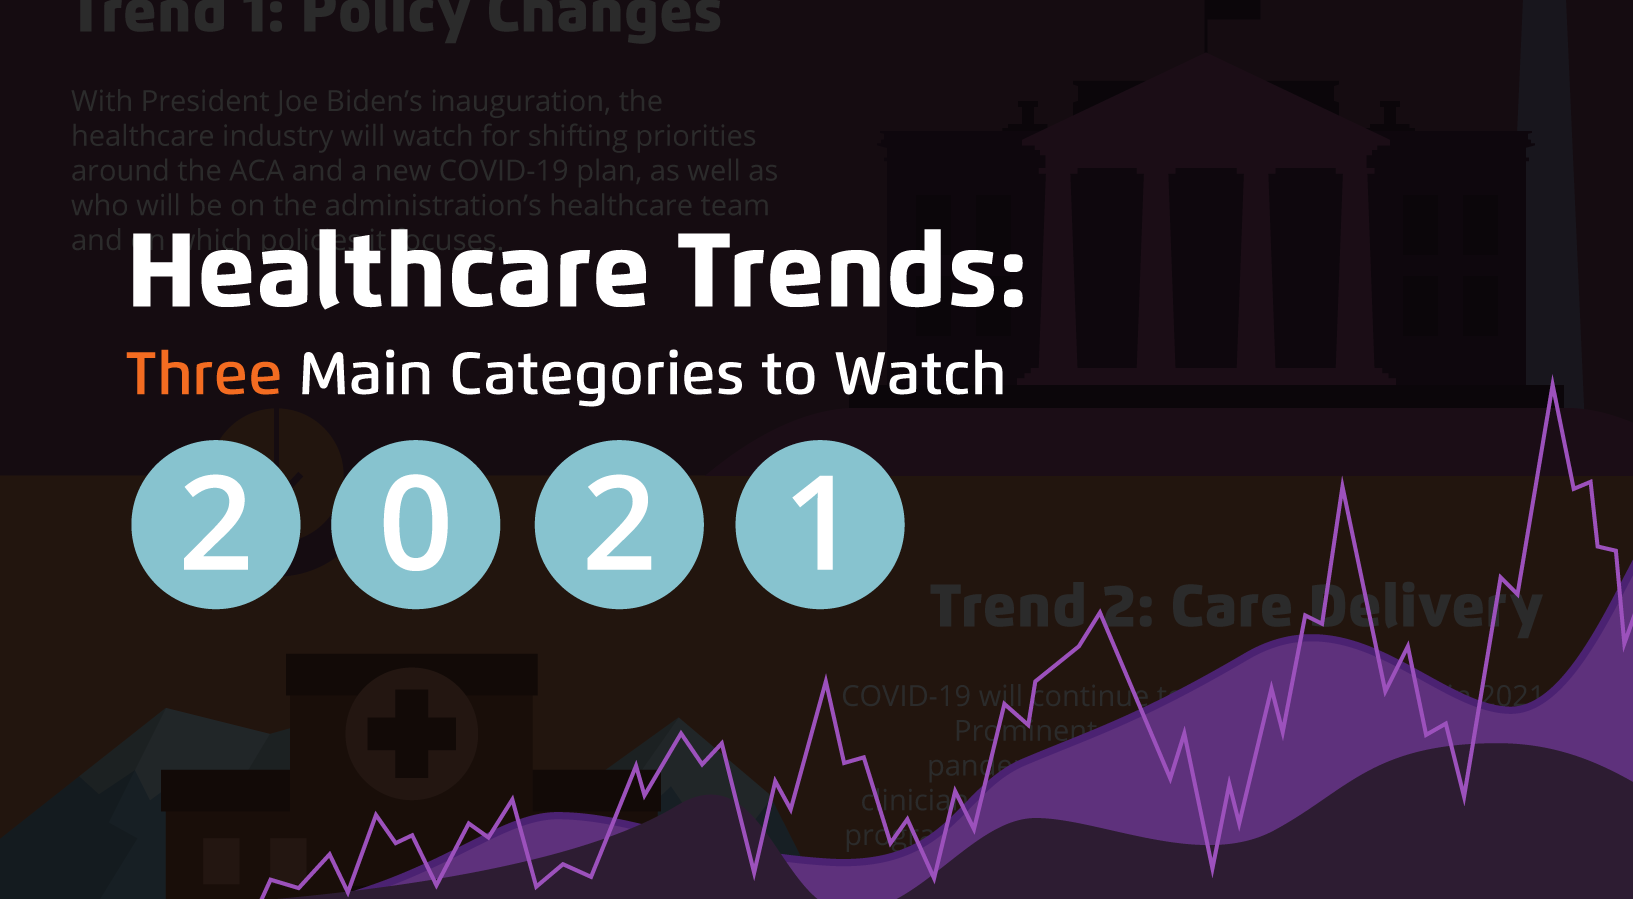 2021 Healthcare Trends